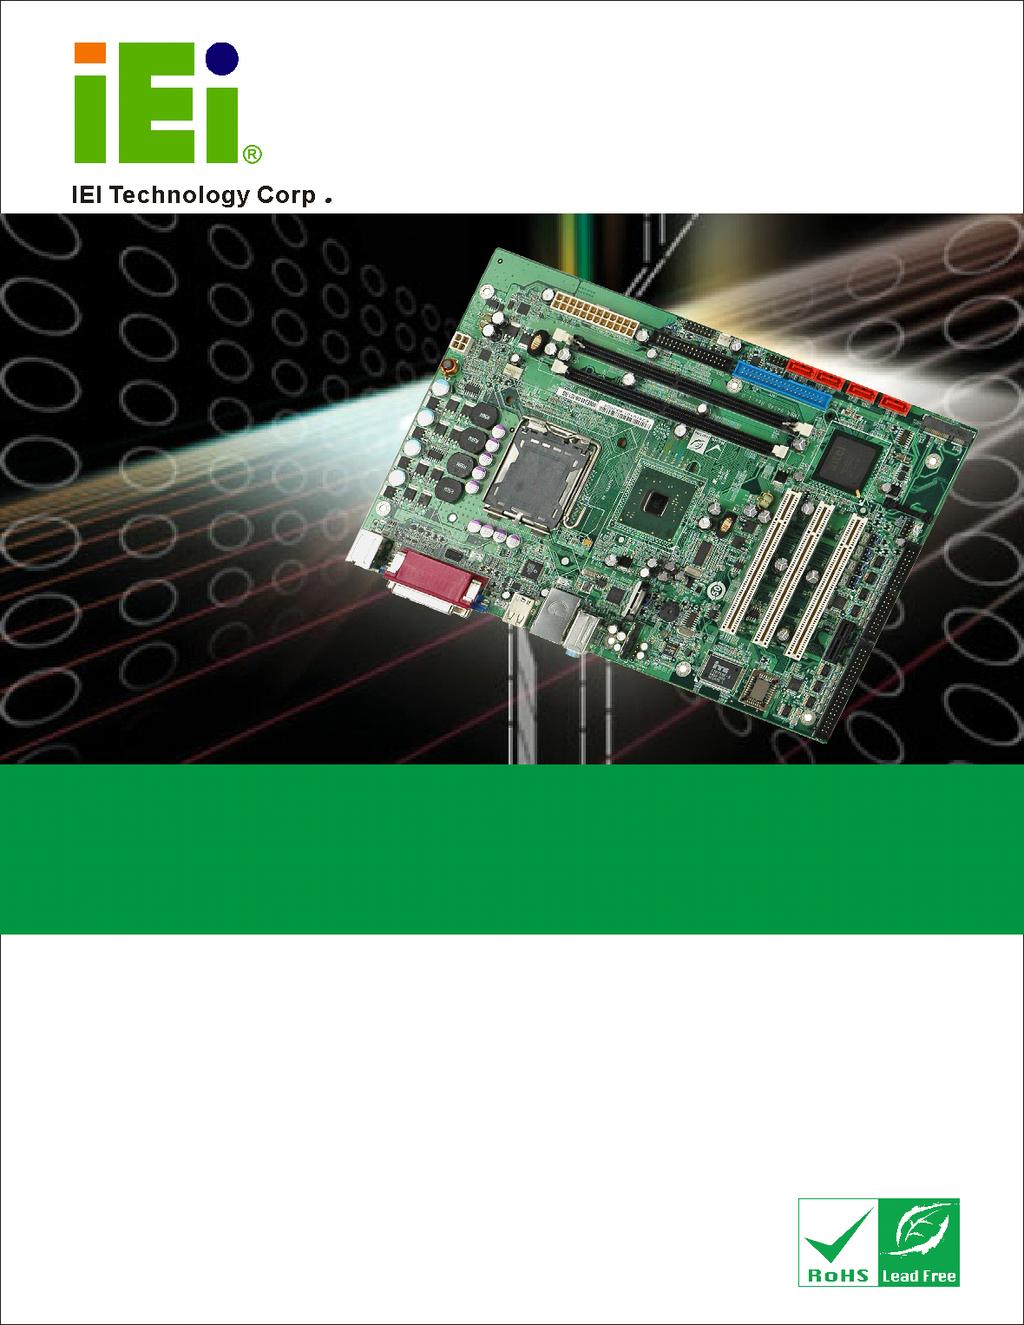 IMBA-9454B ATX Motherboard MODEL: IMBA-9454B ATX Motherboard, Dual VGA, Eight RS-232 Serial Ports Supports Intel